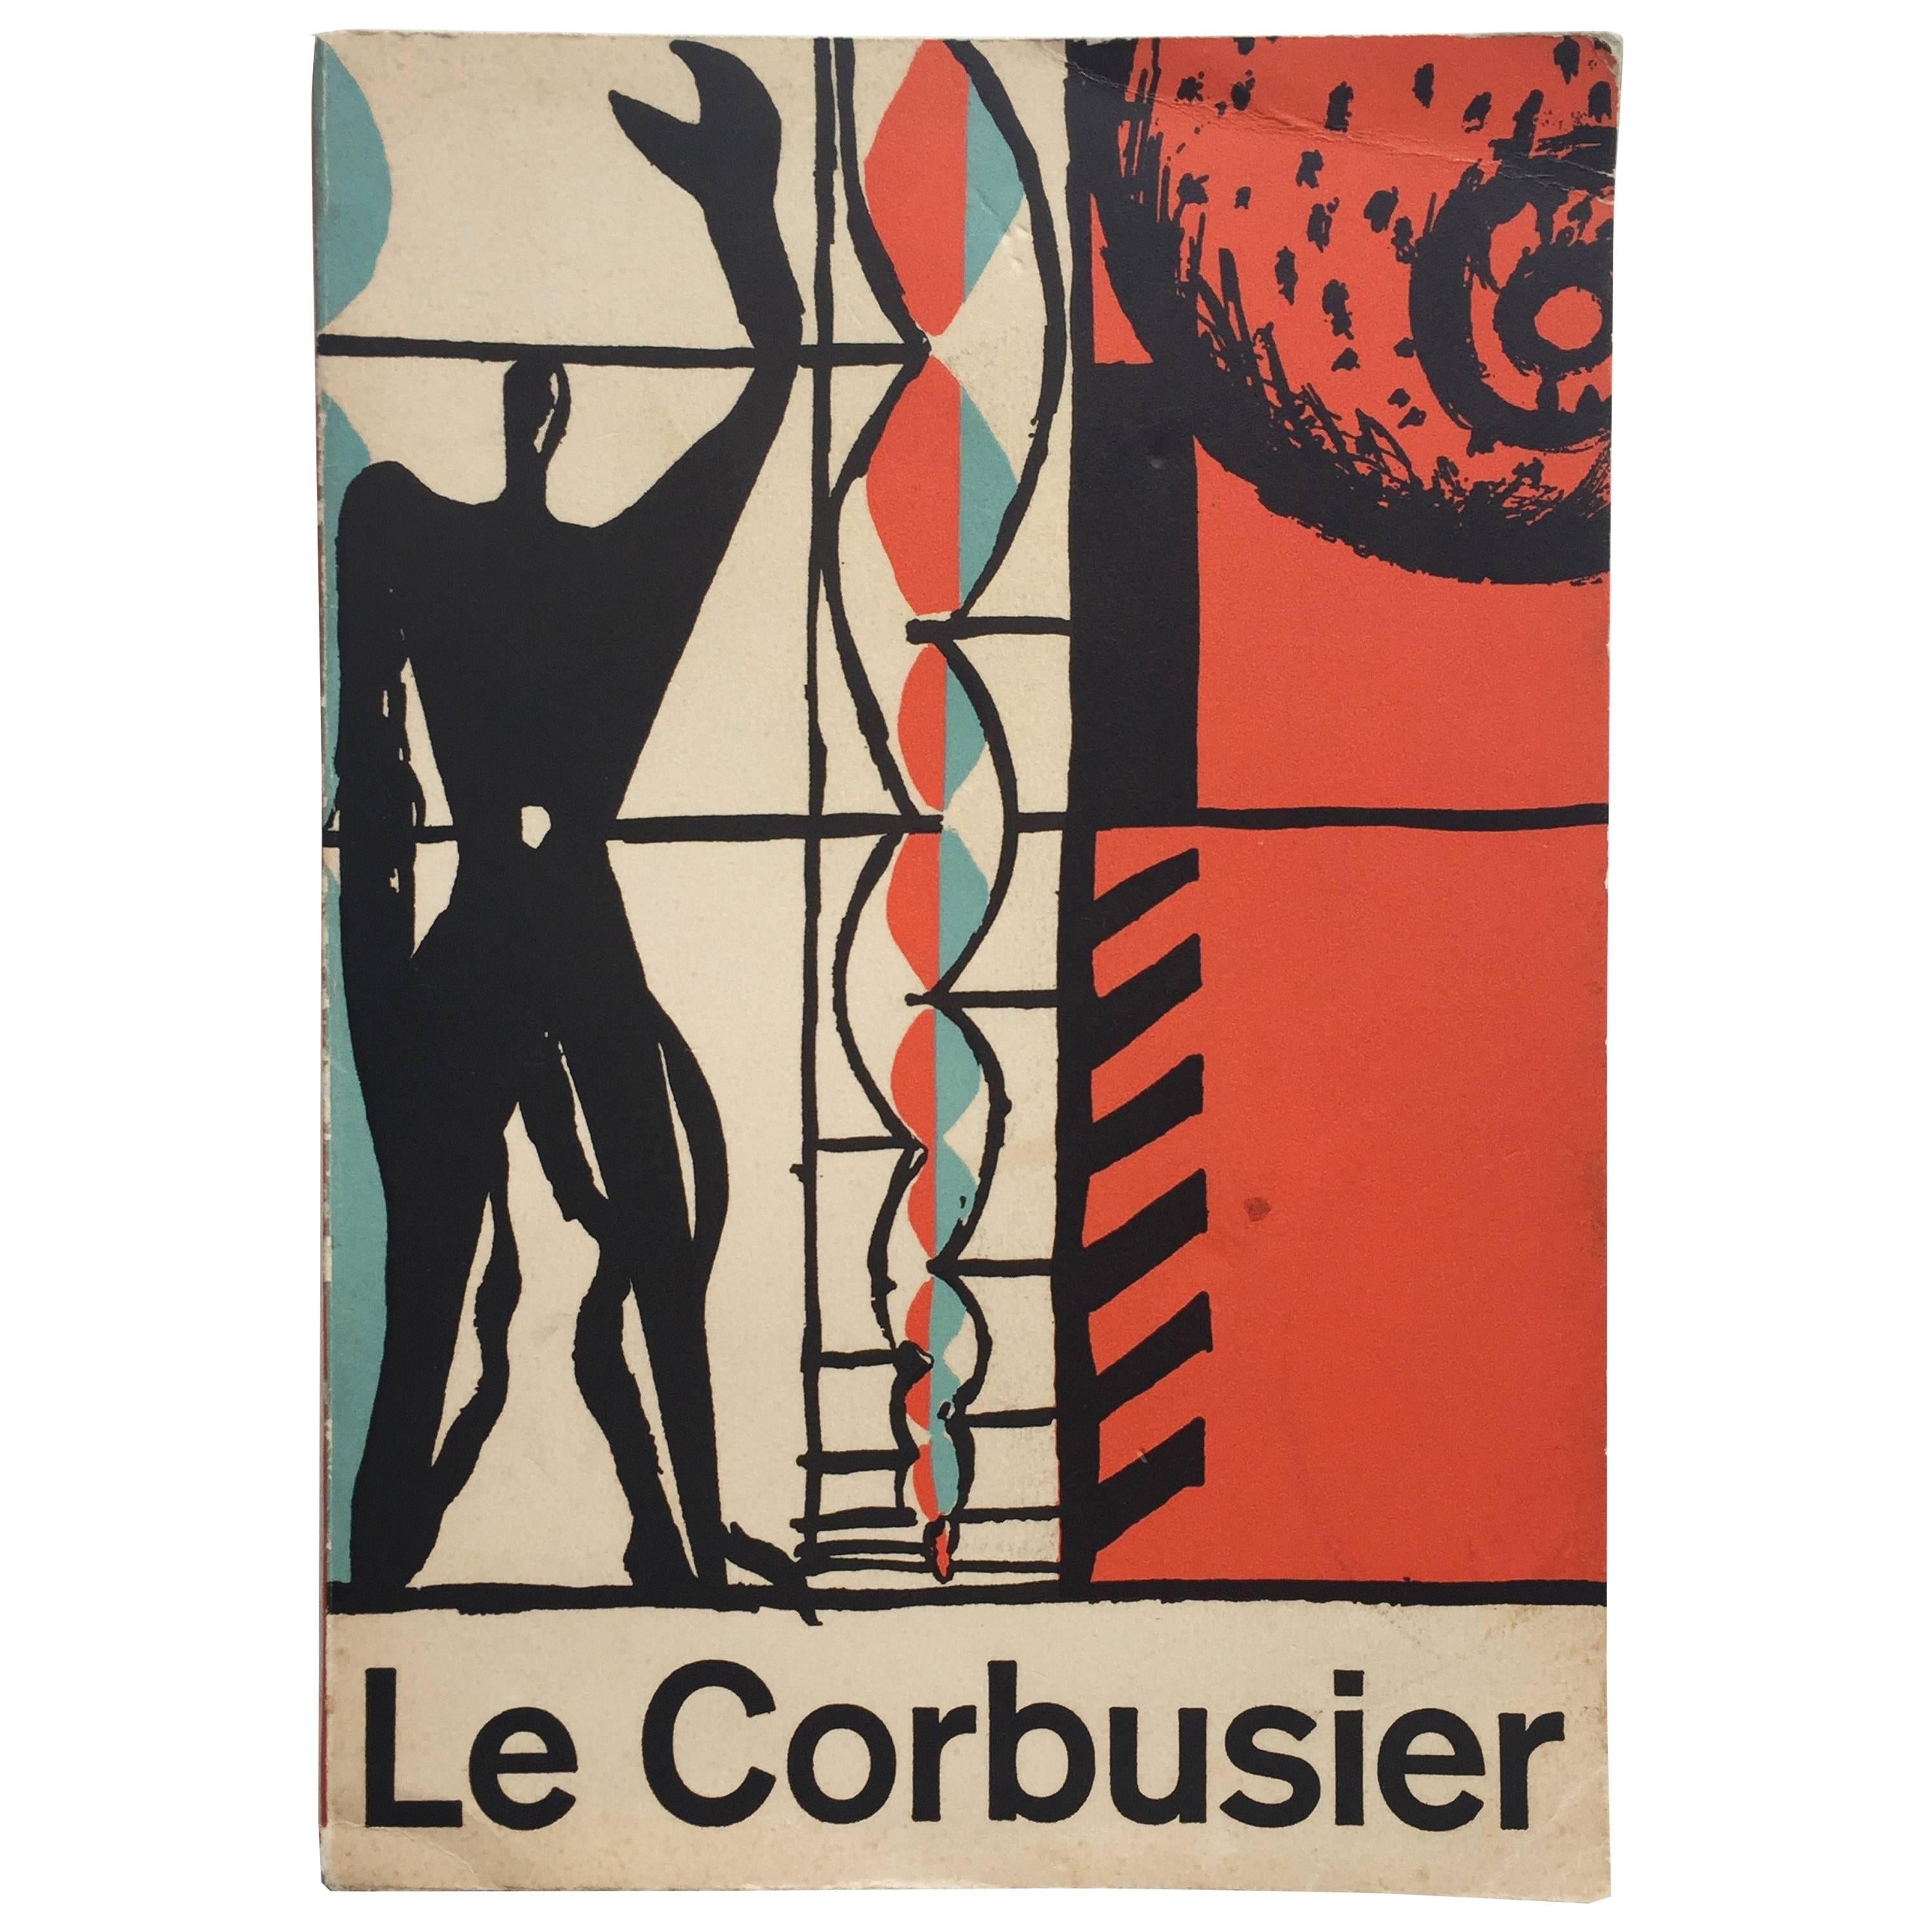 "Le Corbusier", Kunstindustrimuseet, Arkitektur Maleri Skulptur Gobeliner, 1958